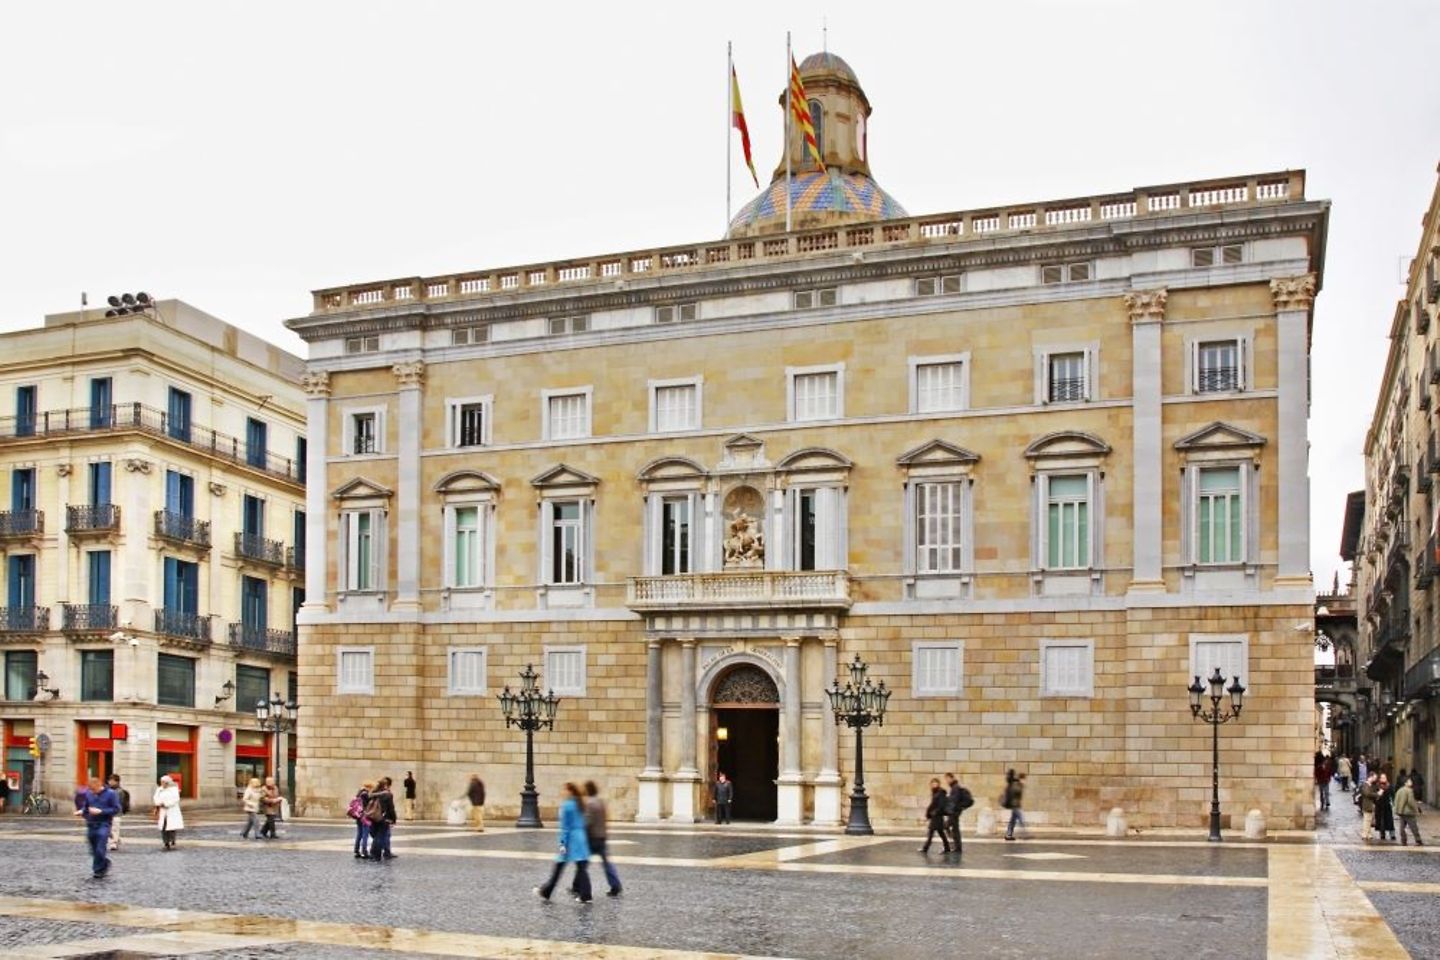 Palau de la Generalitat in Barcelona. Spain